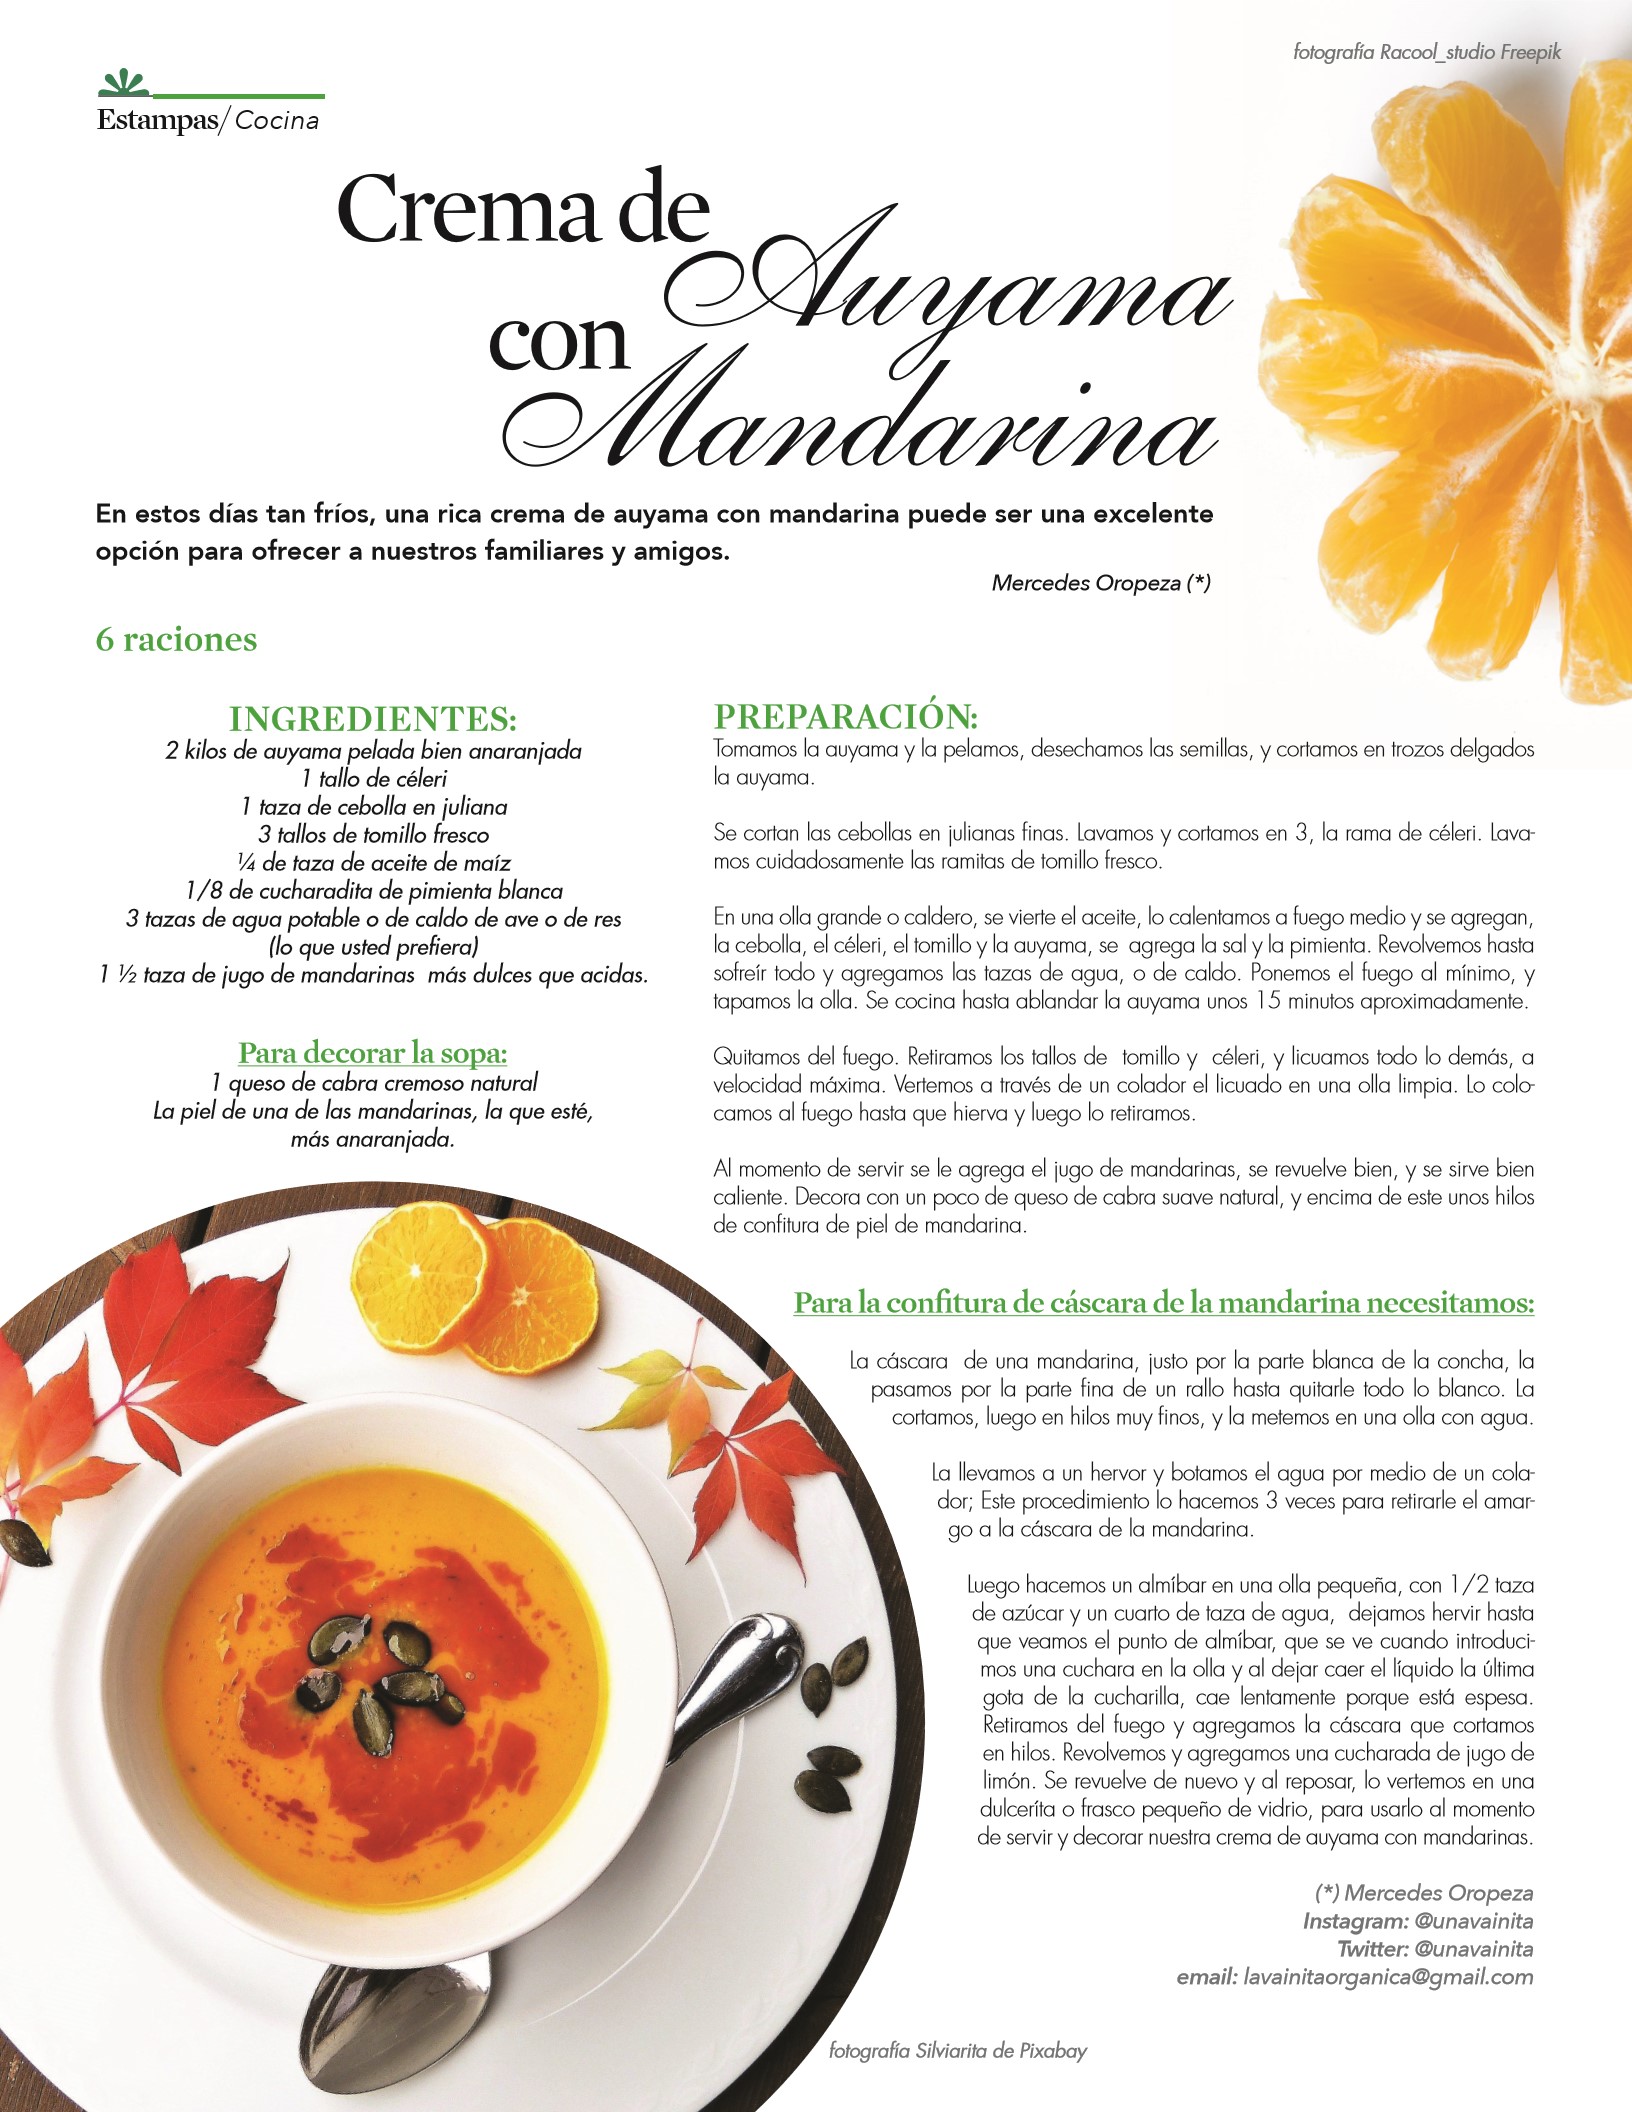 15-REV Gastronomia: Mercedes Oropeza - Crema de auyama con mandarina